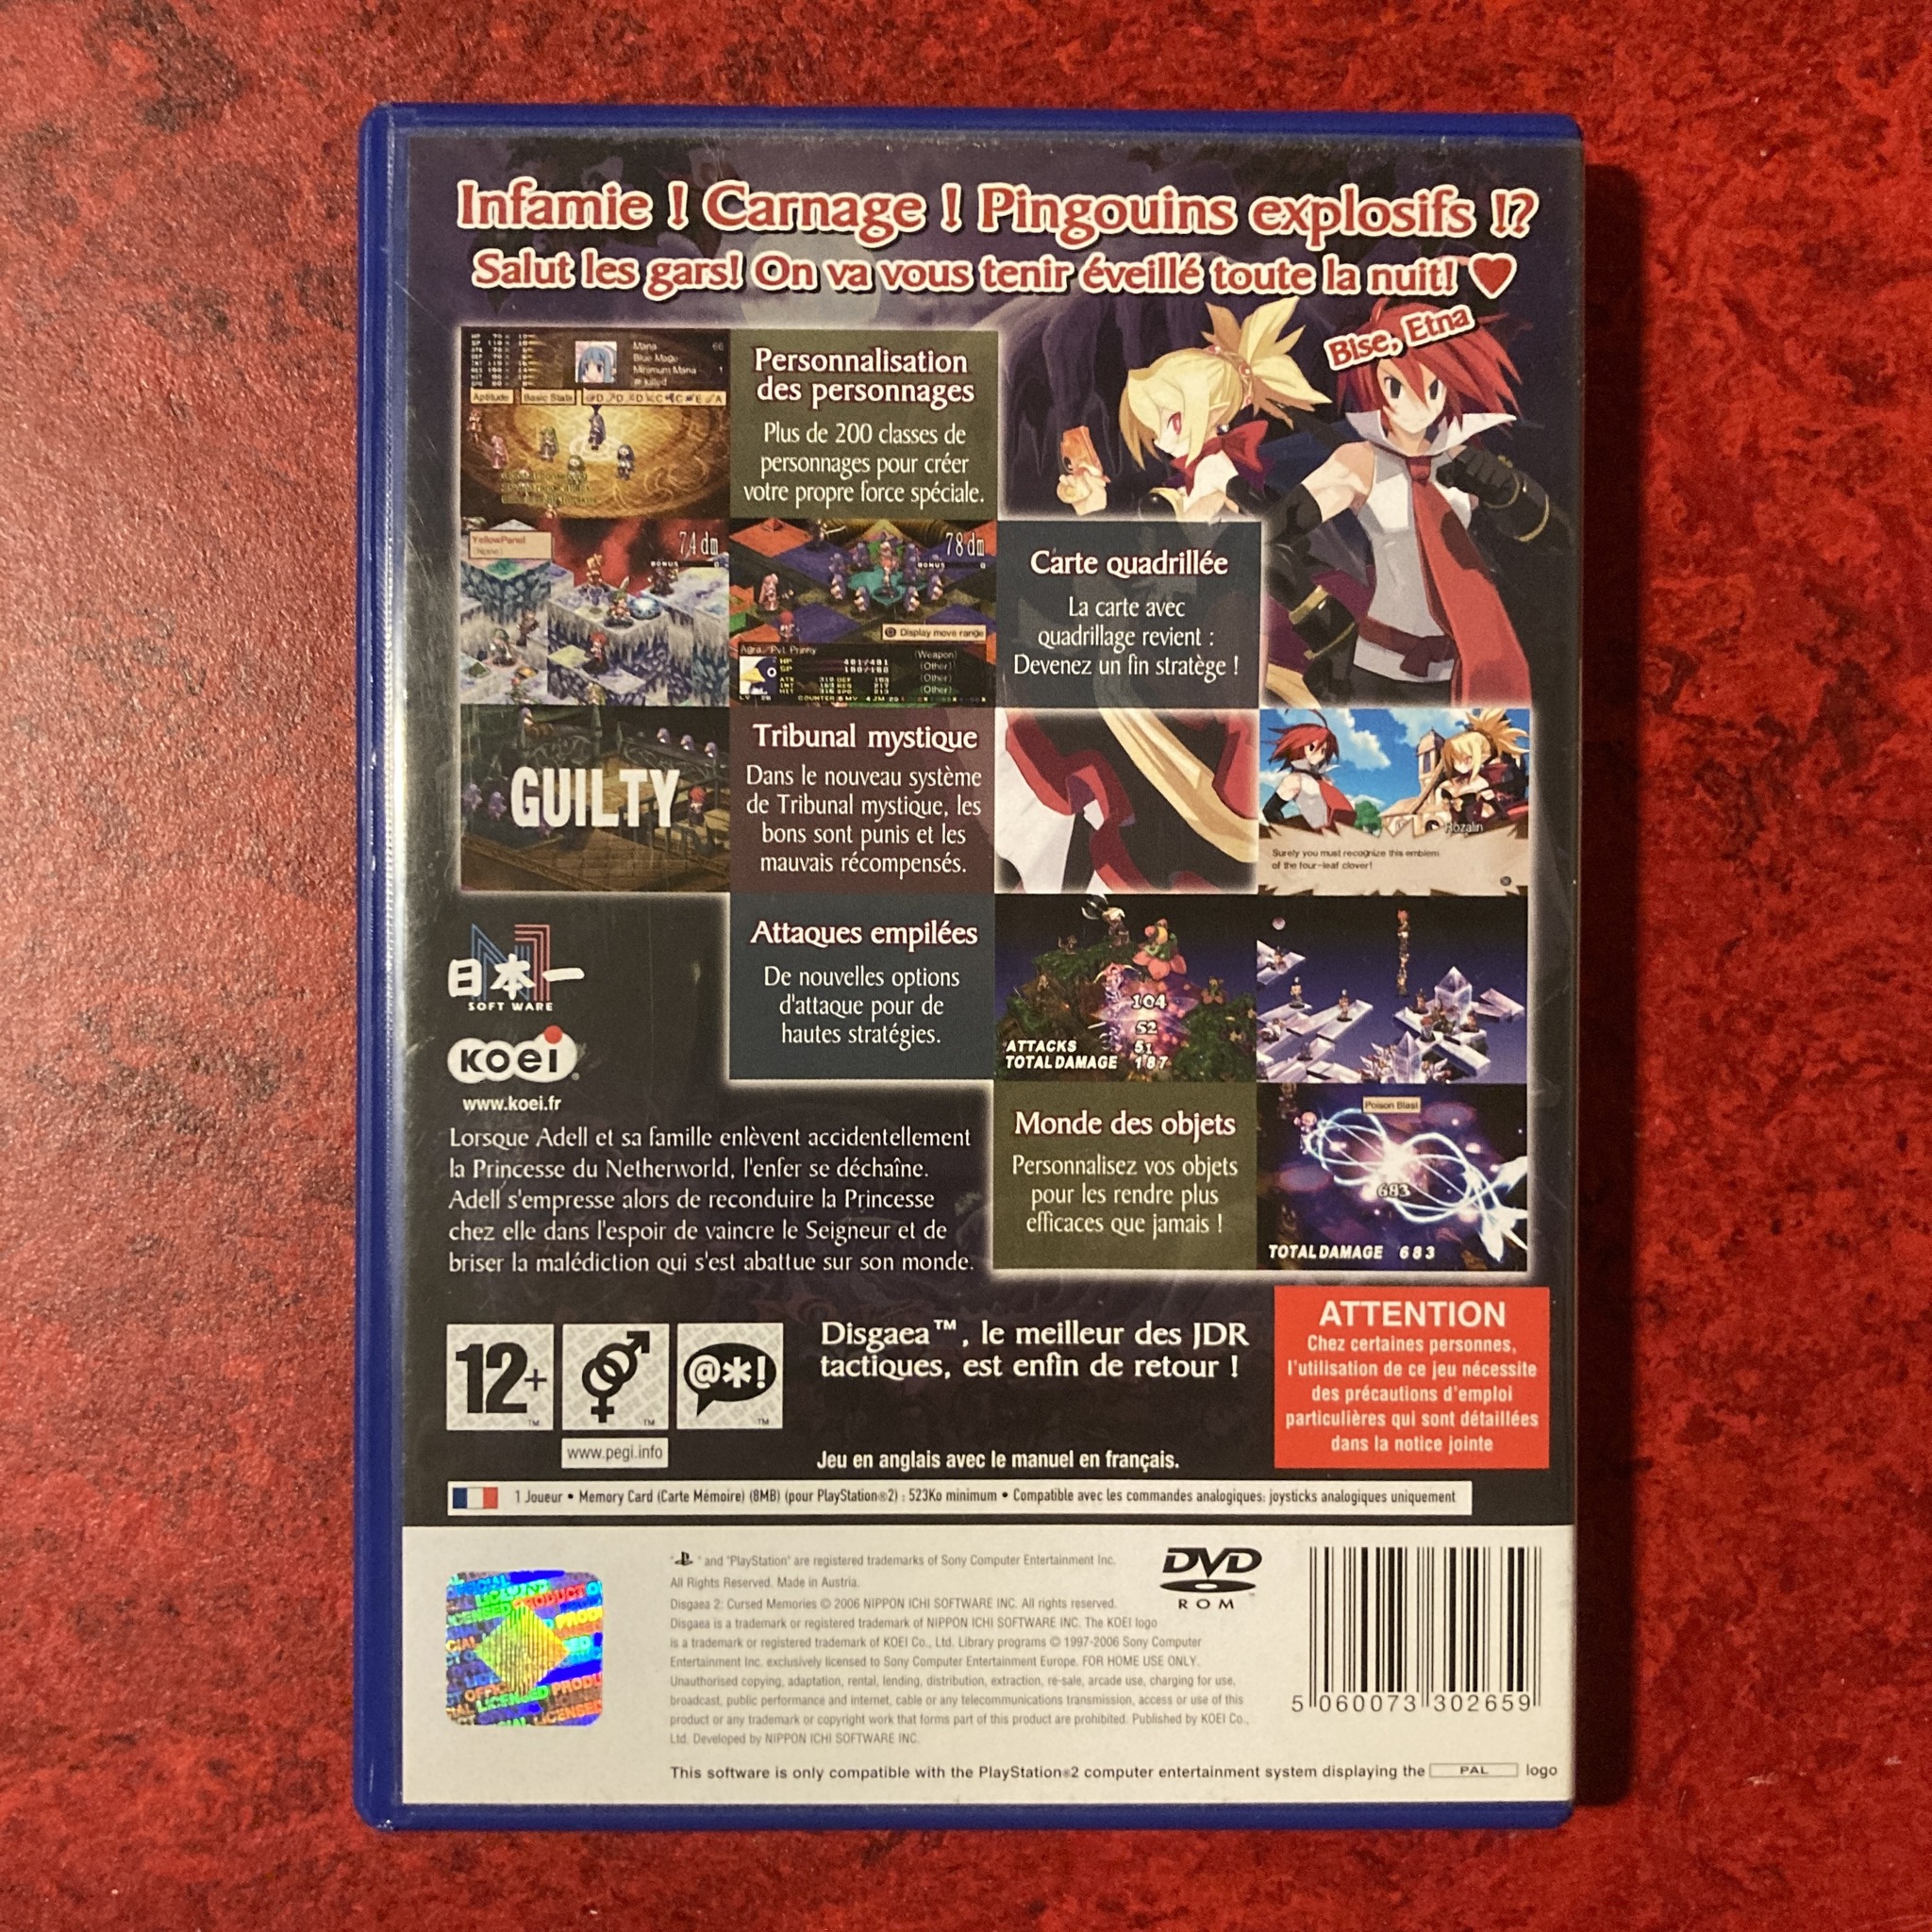 Disgaea 2 : Cursed Memories (PS2)